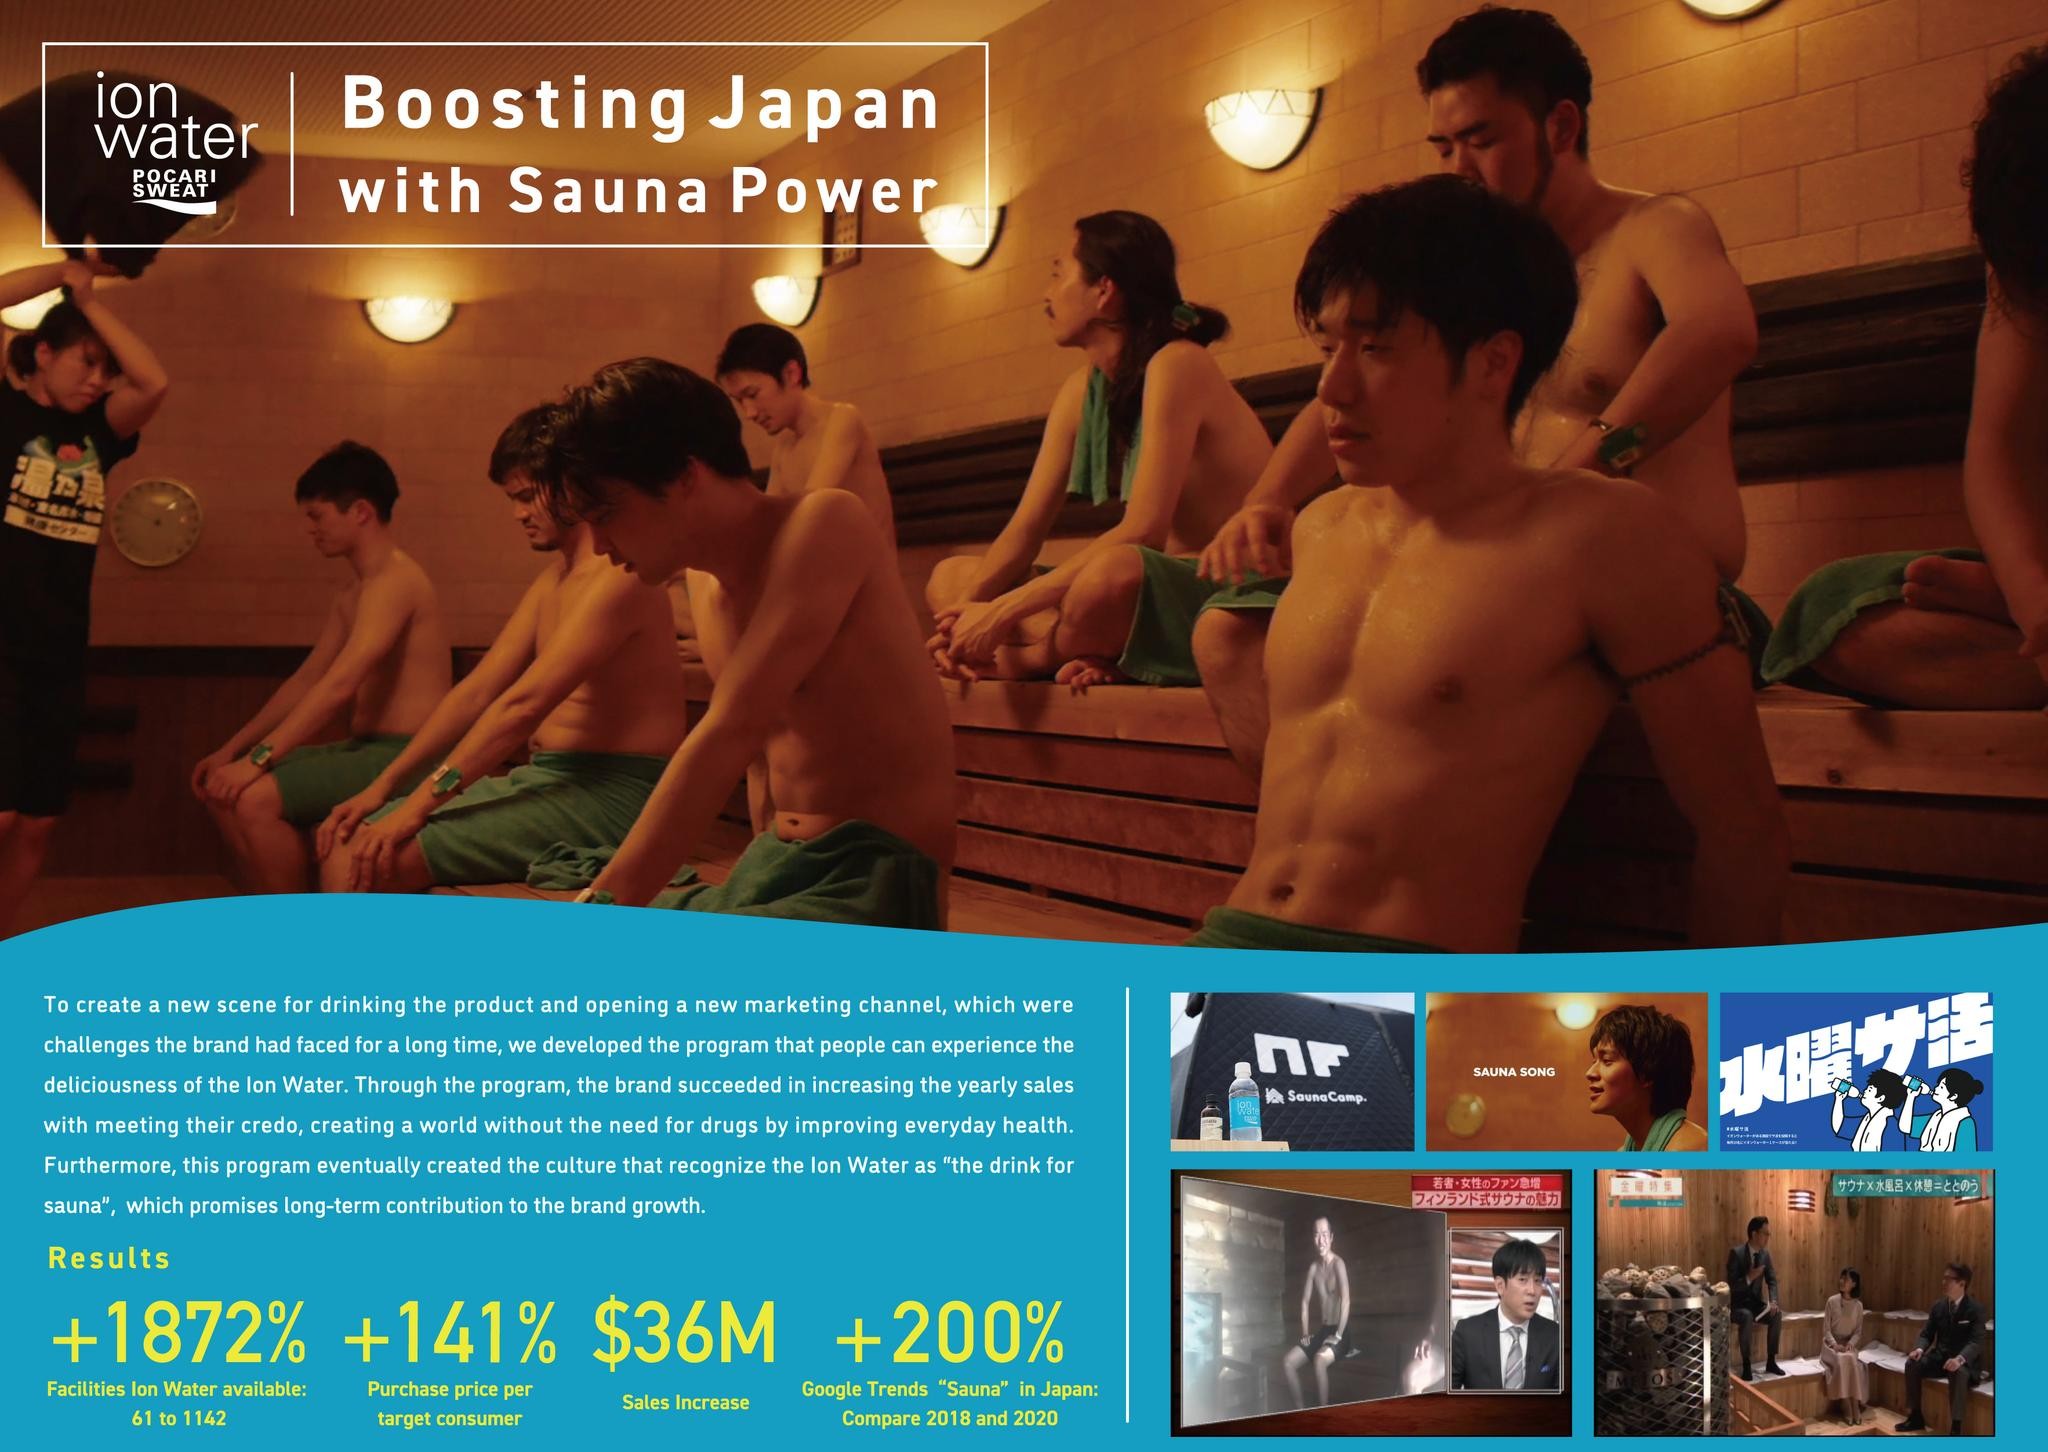 Boosting Japan with Sauna Power